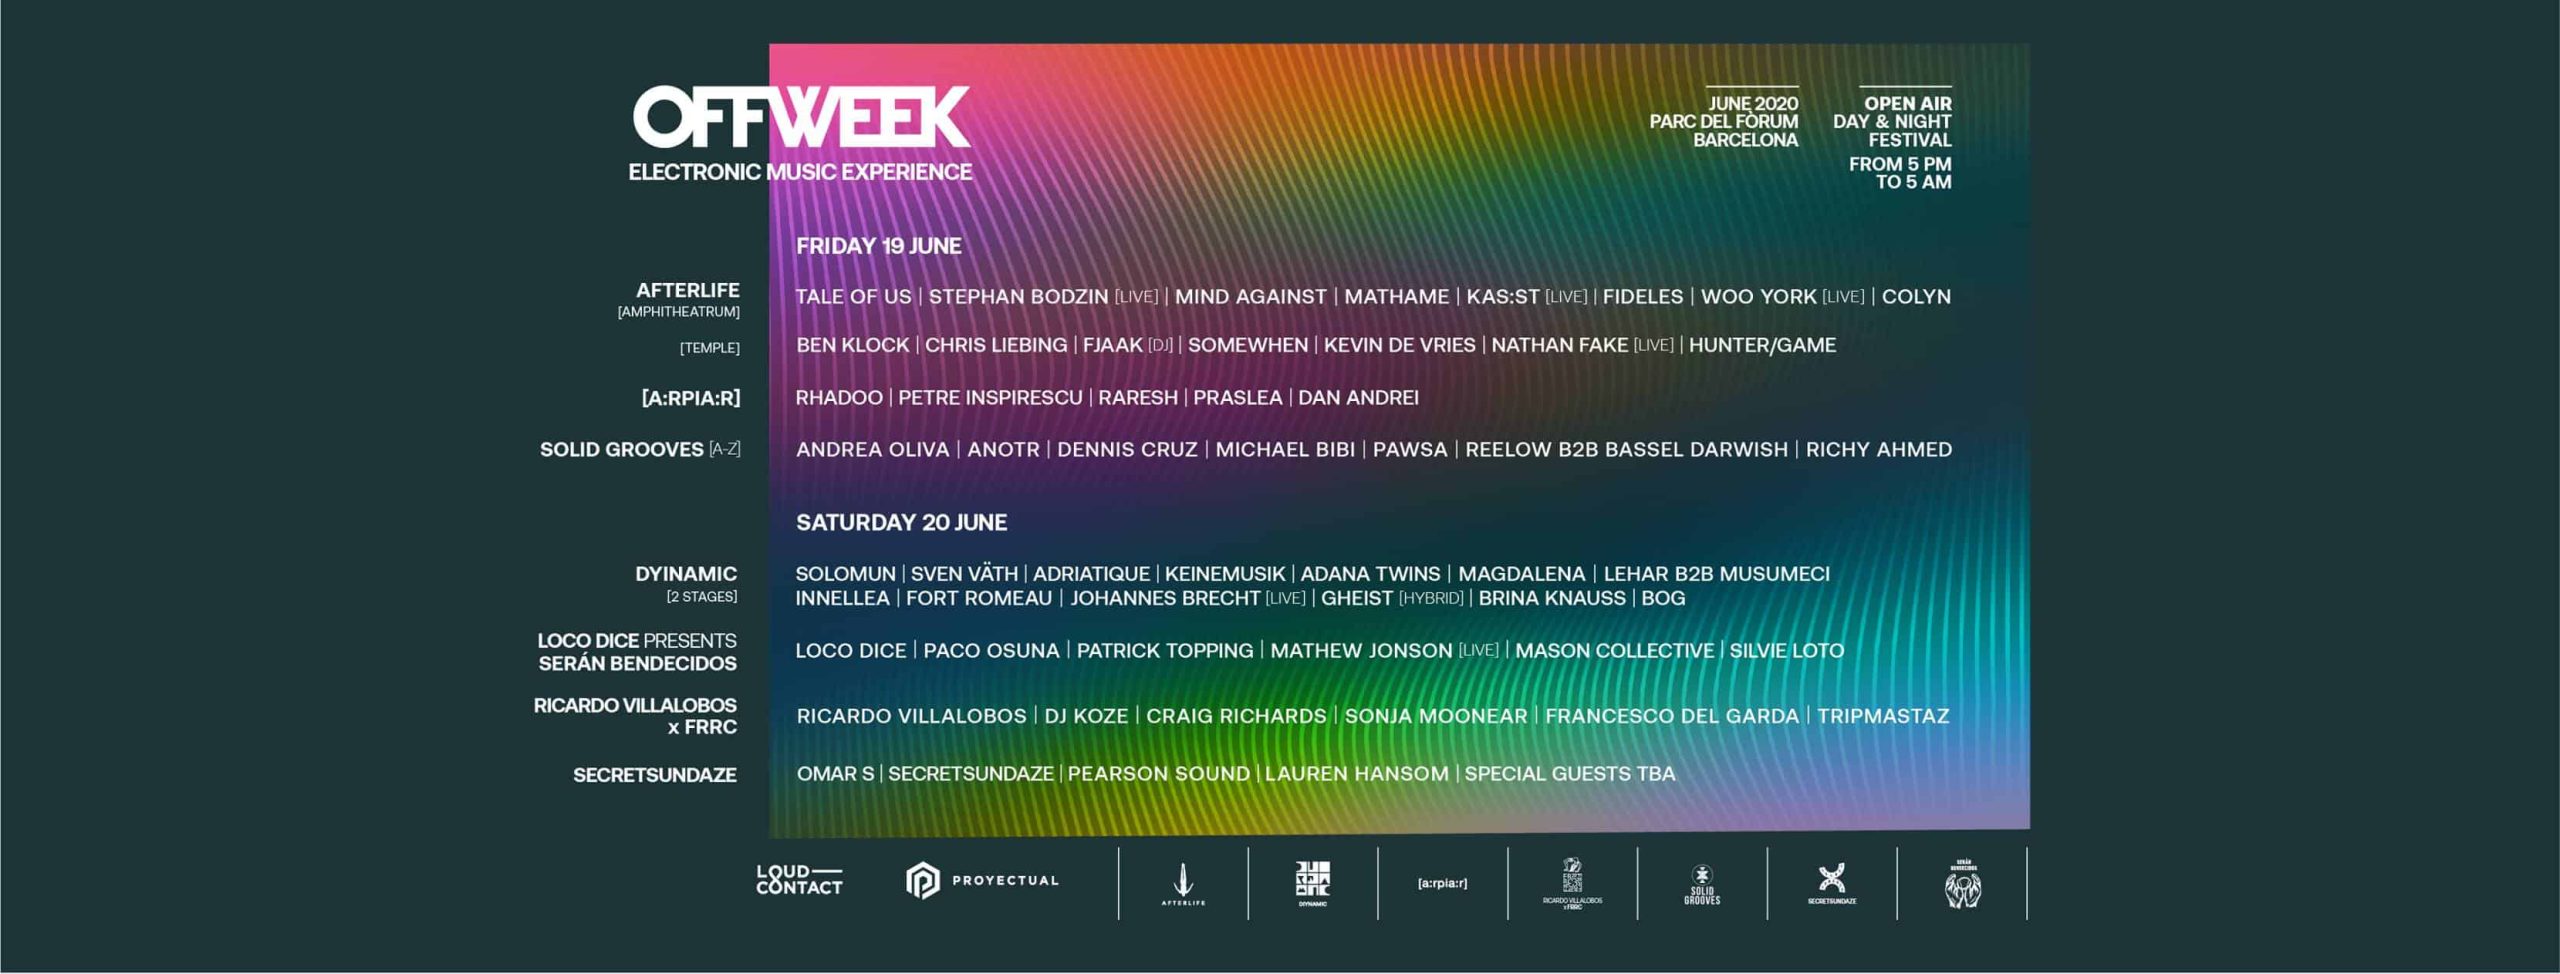 Off Week Festival 2020 - Lineup